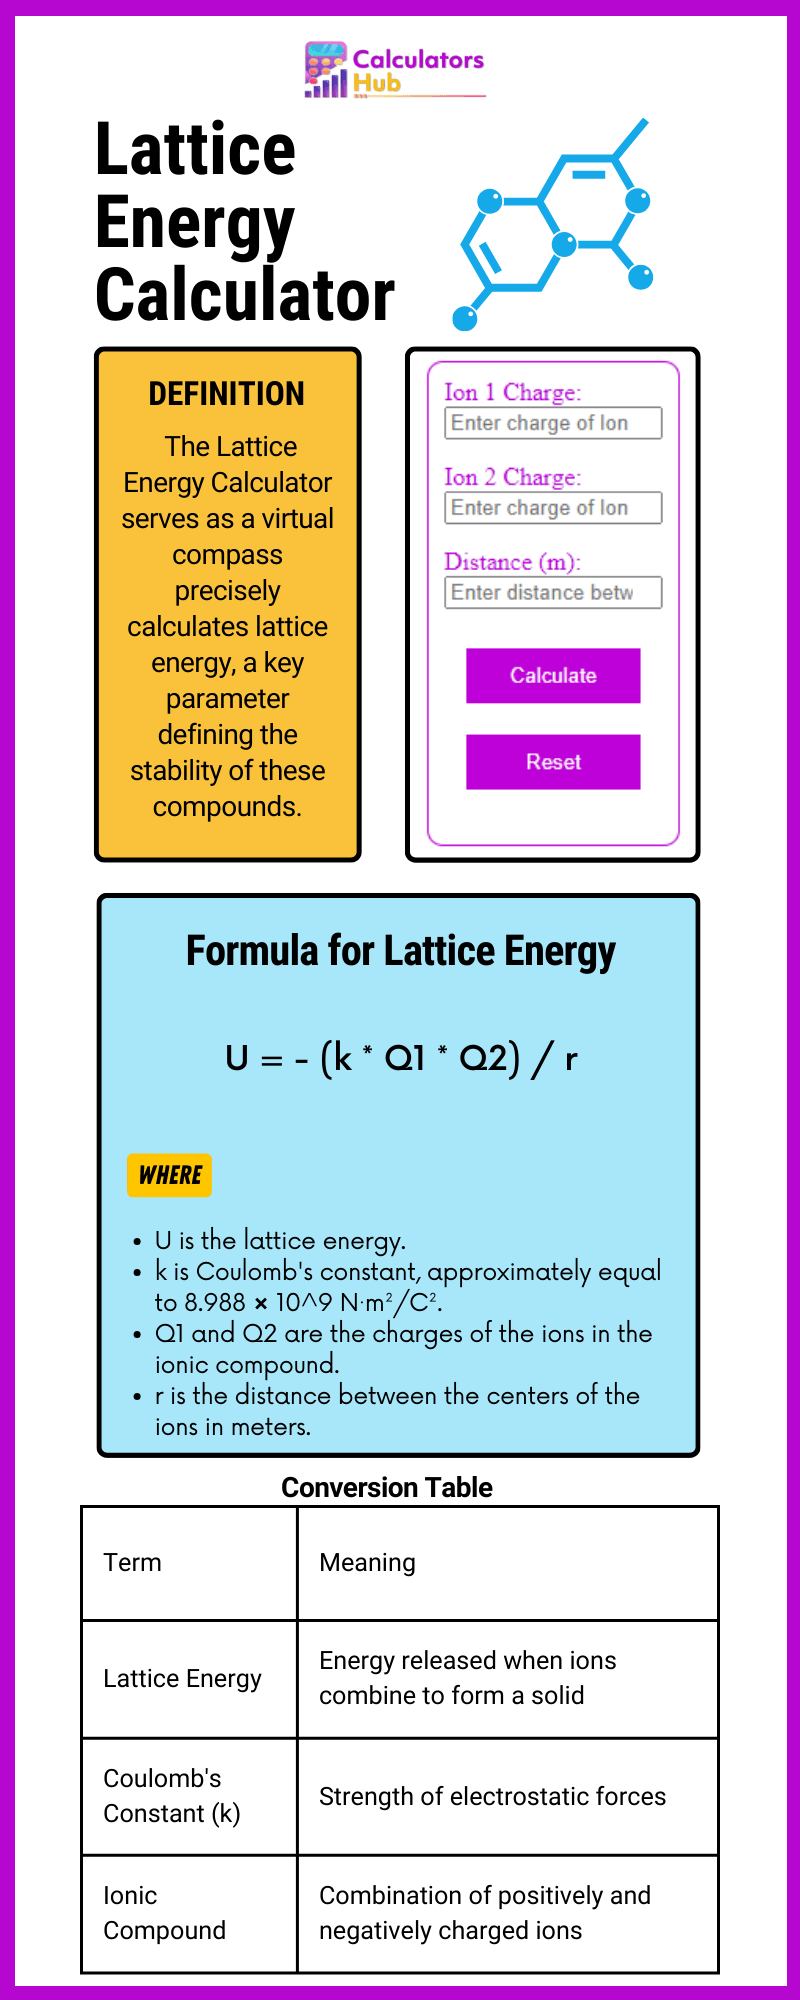 Lattice Energy Calculator